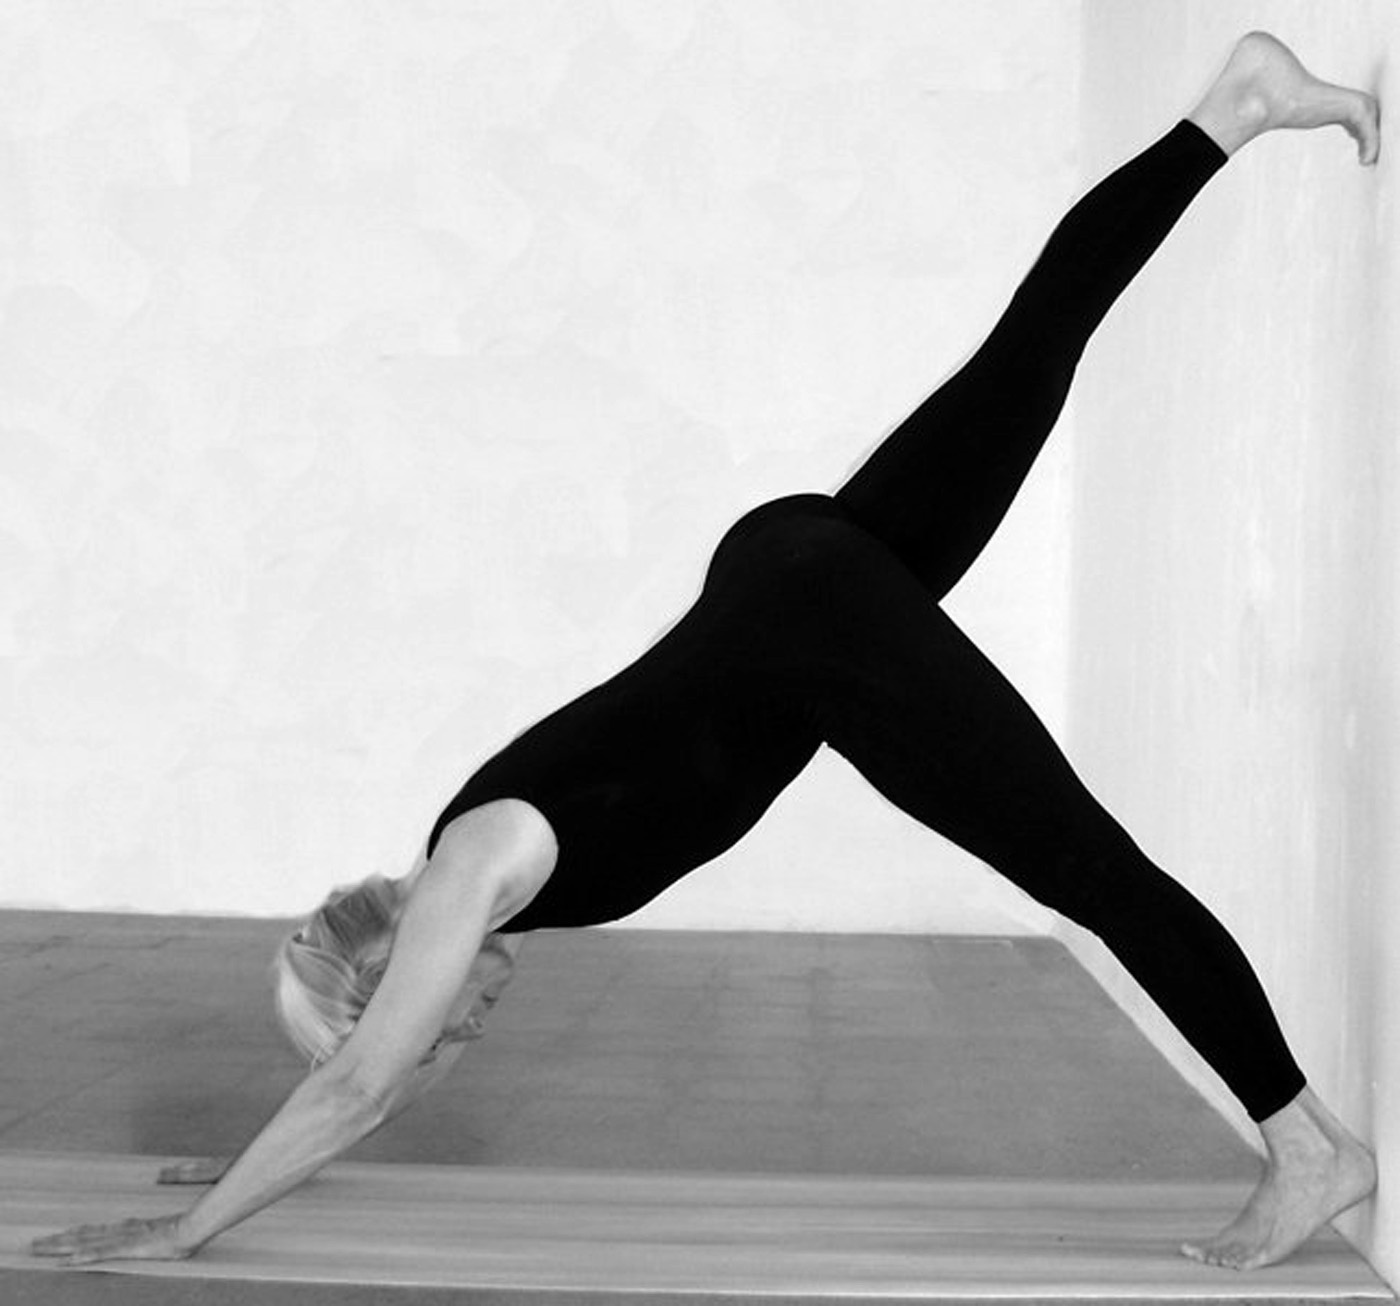 5 Yoga Poses to Help You Breathe Deeply | Fleet Feet